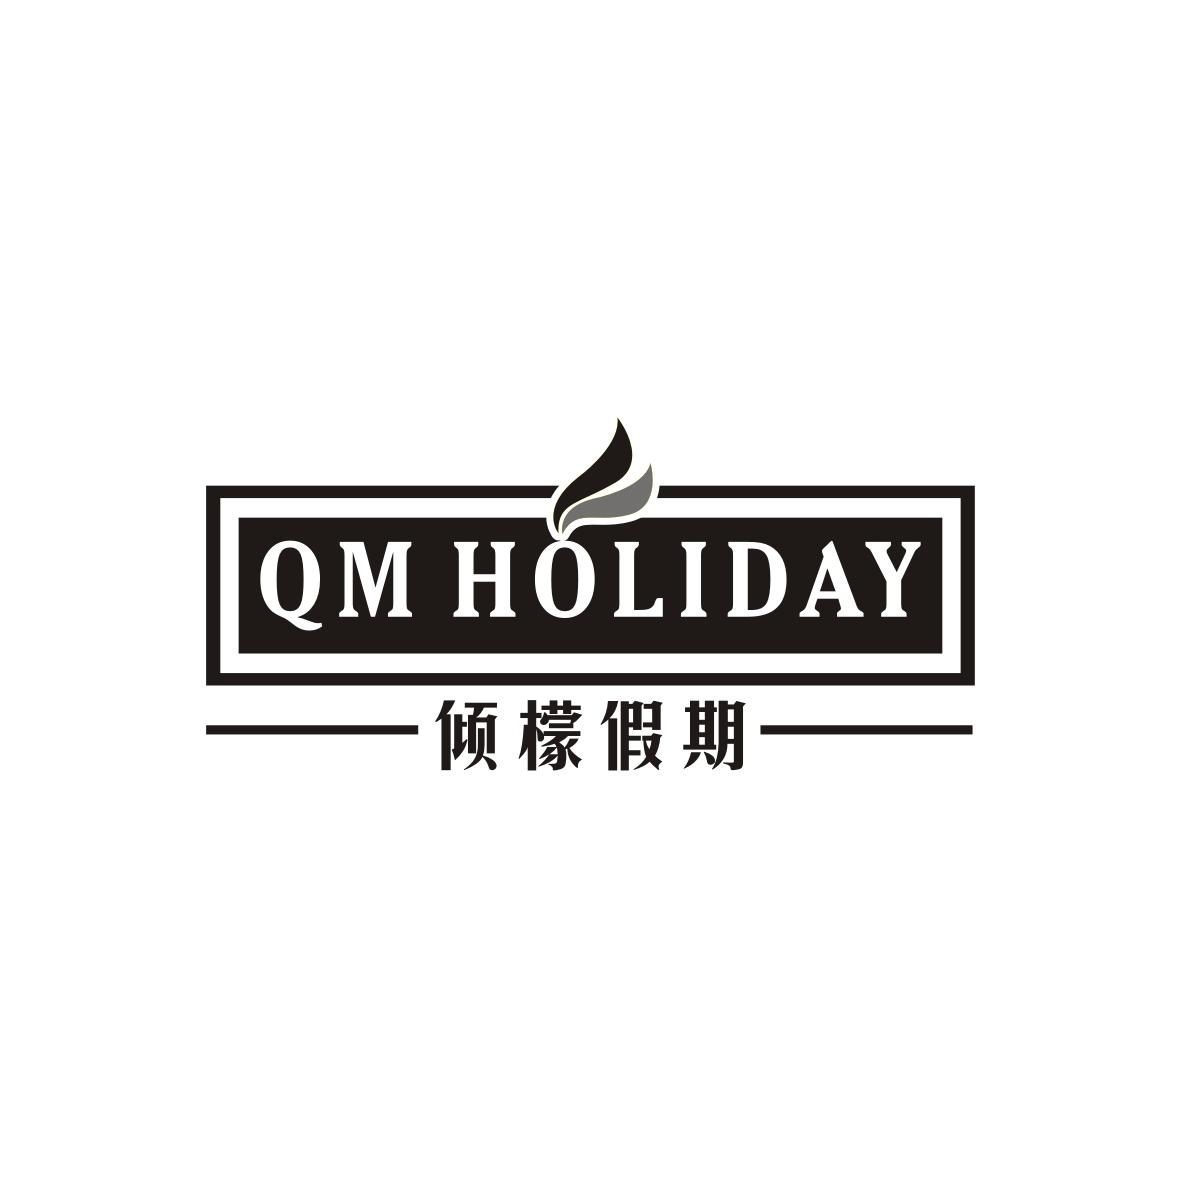 05类-医药保健倾檬假期 QM HOLIDAY商标转让